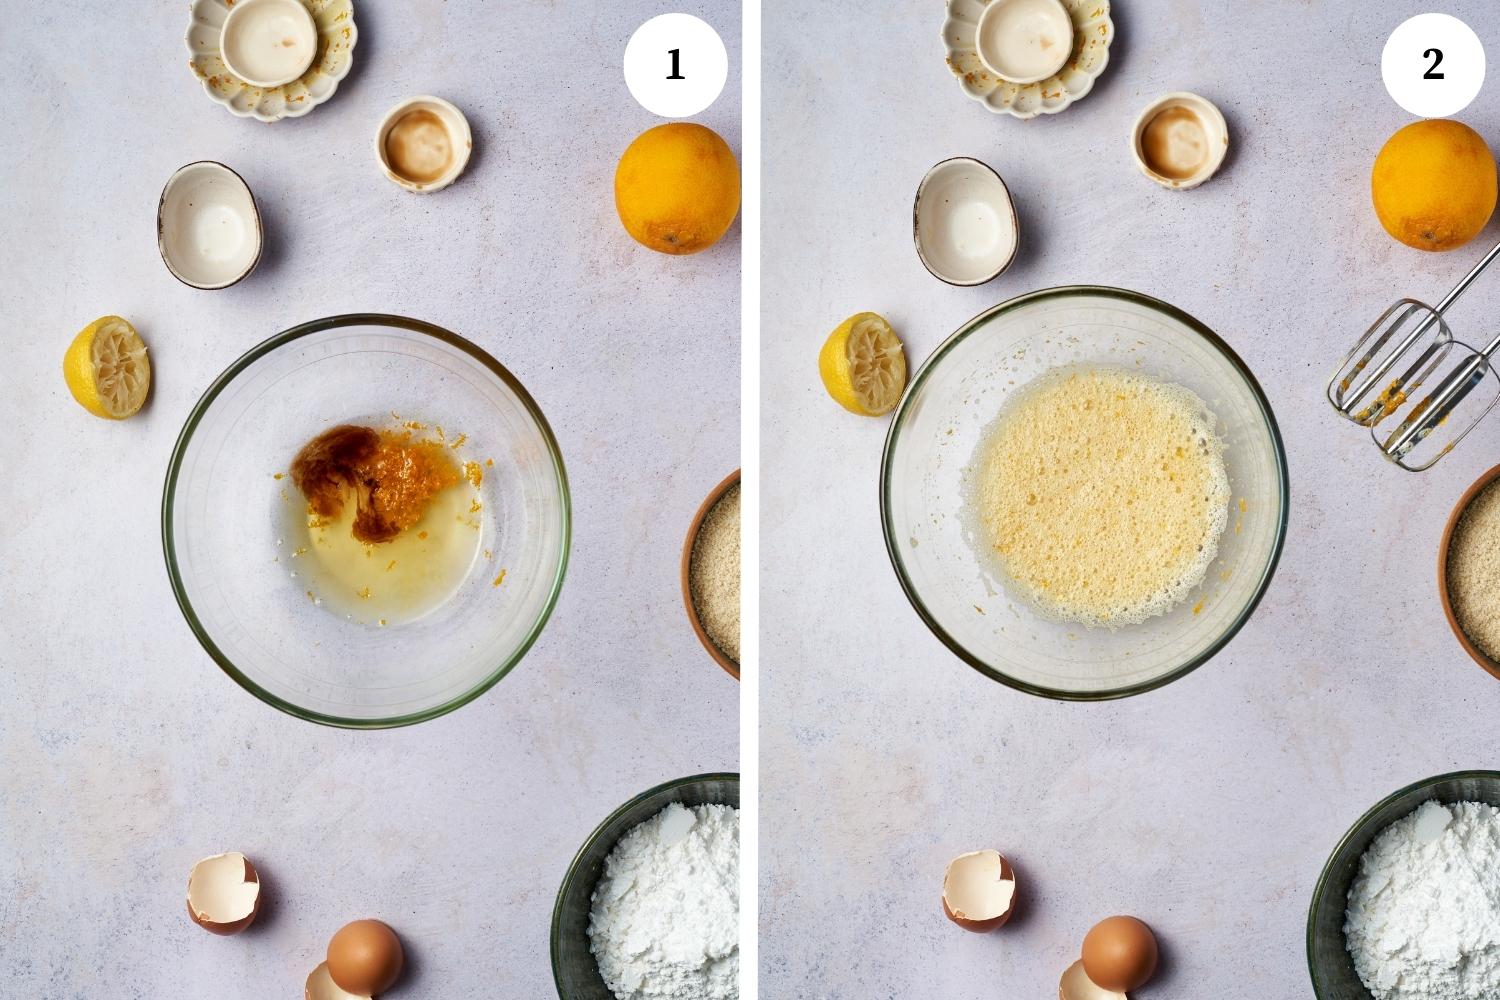 ricciarelli procedure: egg whites, lemon juice, vanilla extract, almond extract, and orange zest in a large mixing bowl